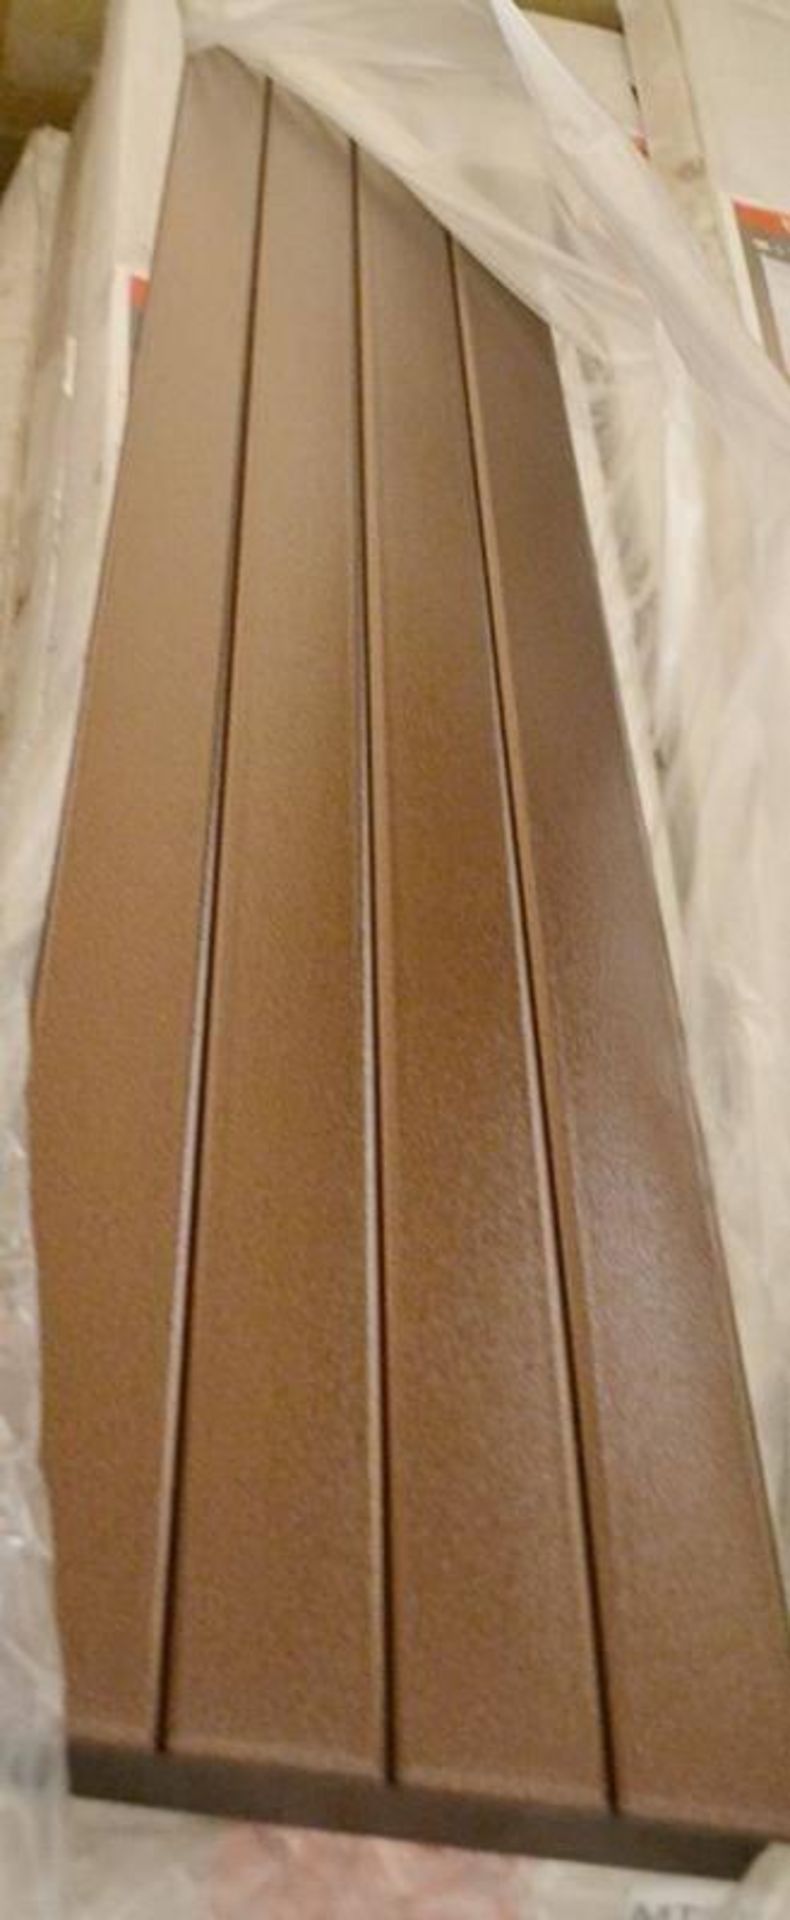 10 x Quinn Slieve Designer Single Panel Radiator in Copper - Contemporary Design - Will Enhance any - Image 6 of 8